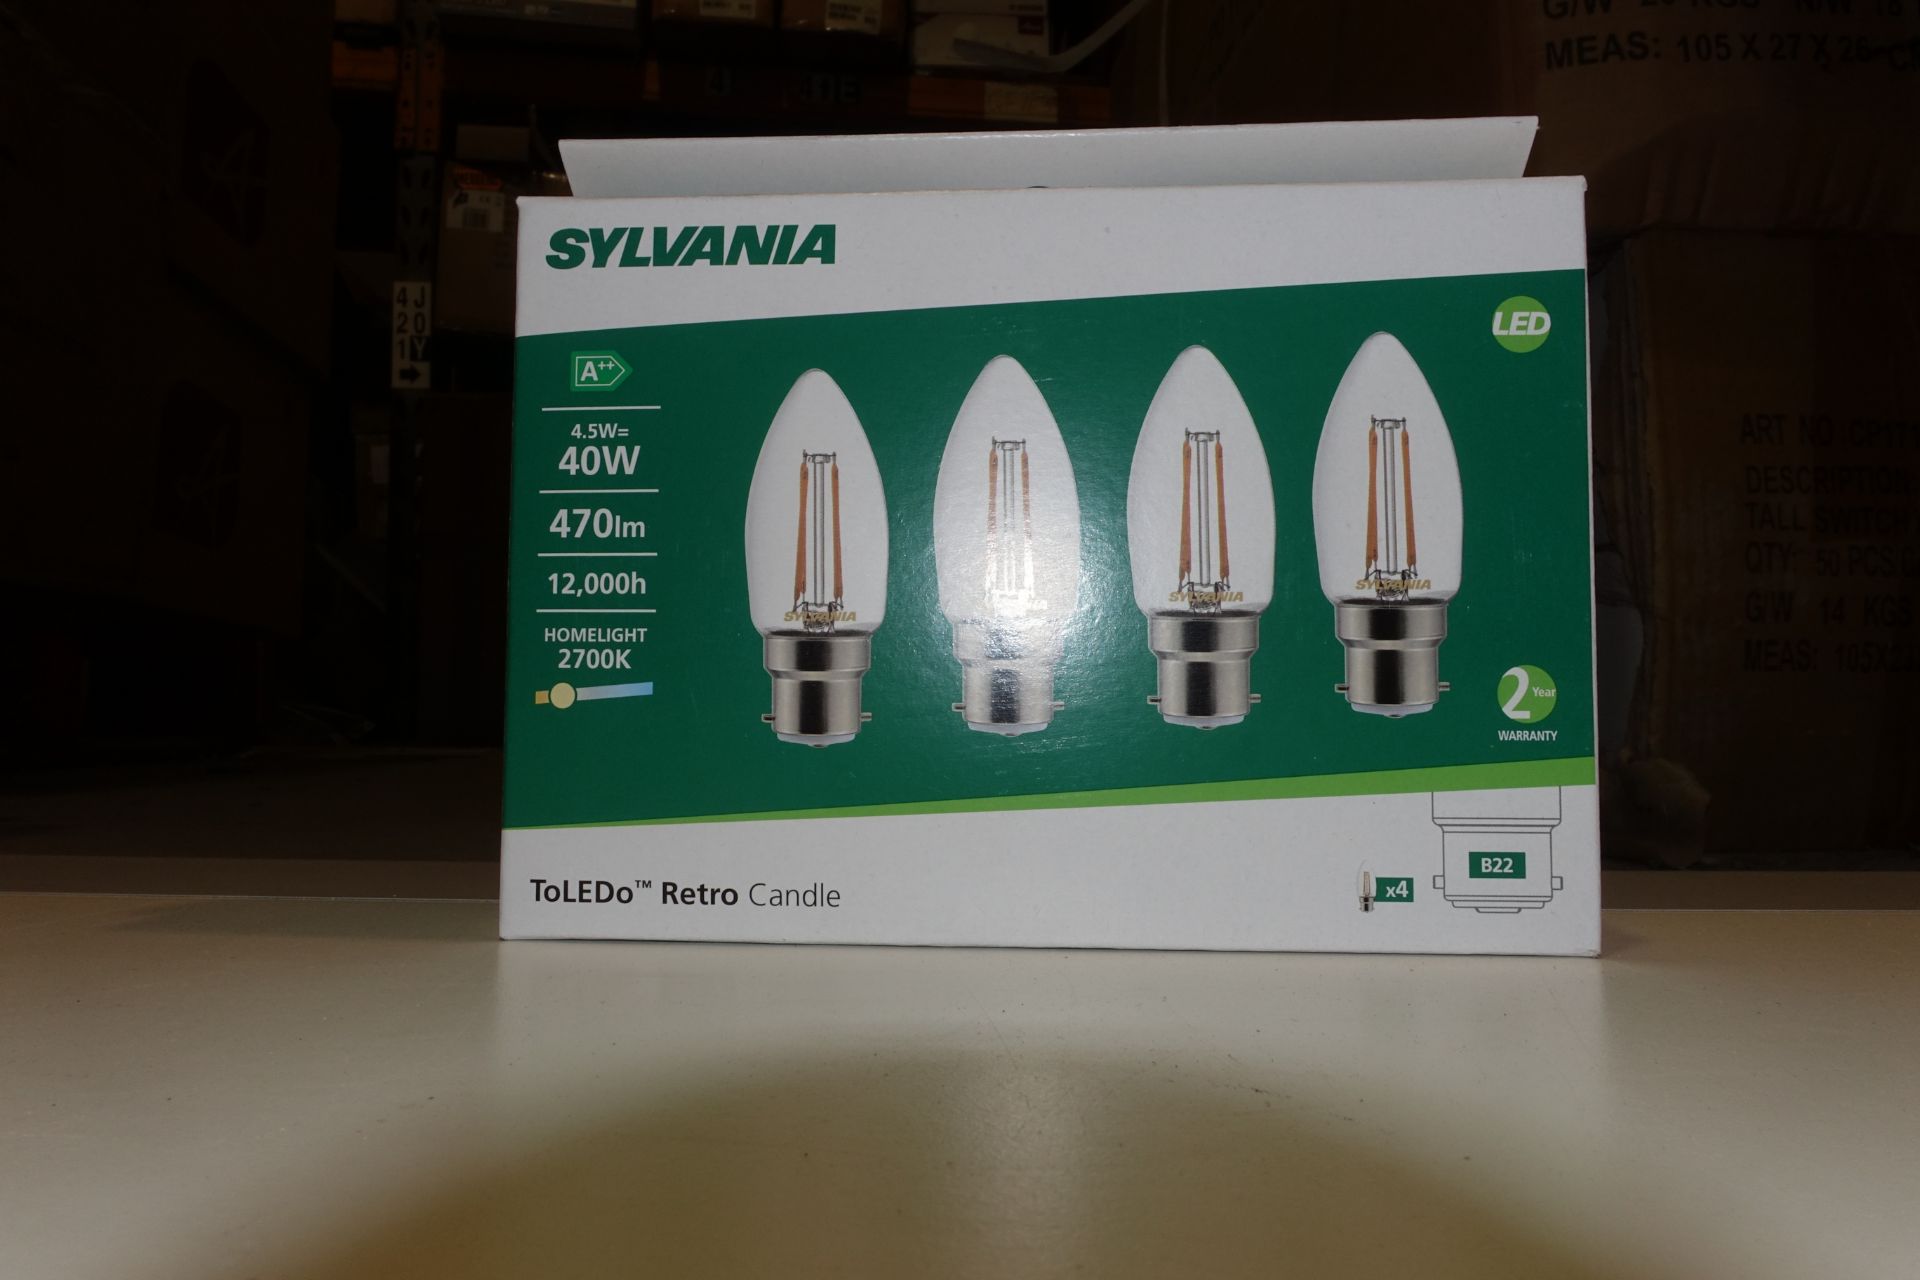 192 x SYLVANIA 0028221 4.5W LED RETRO Candle Lamps B22 Fitting